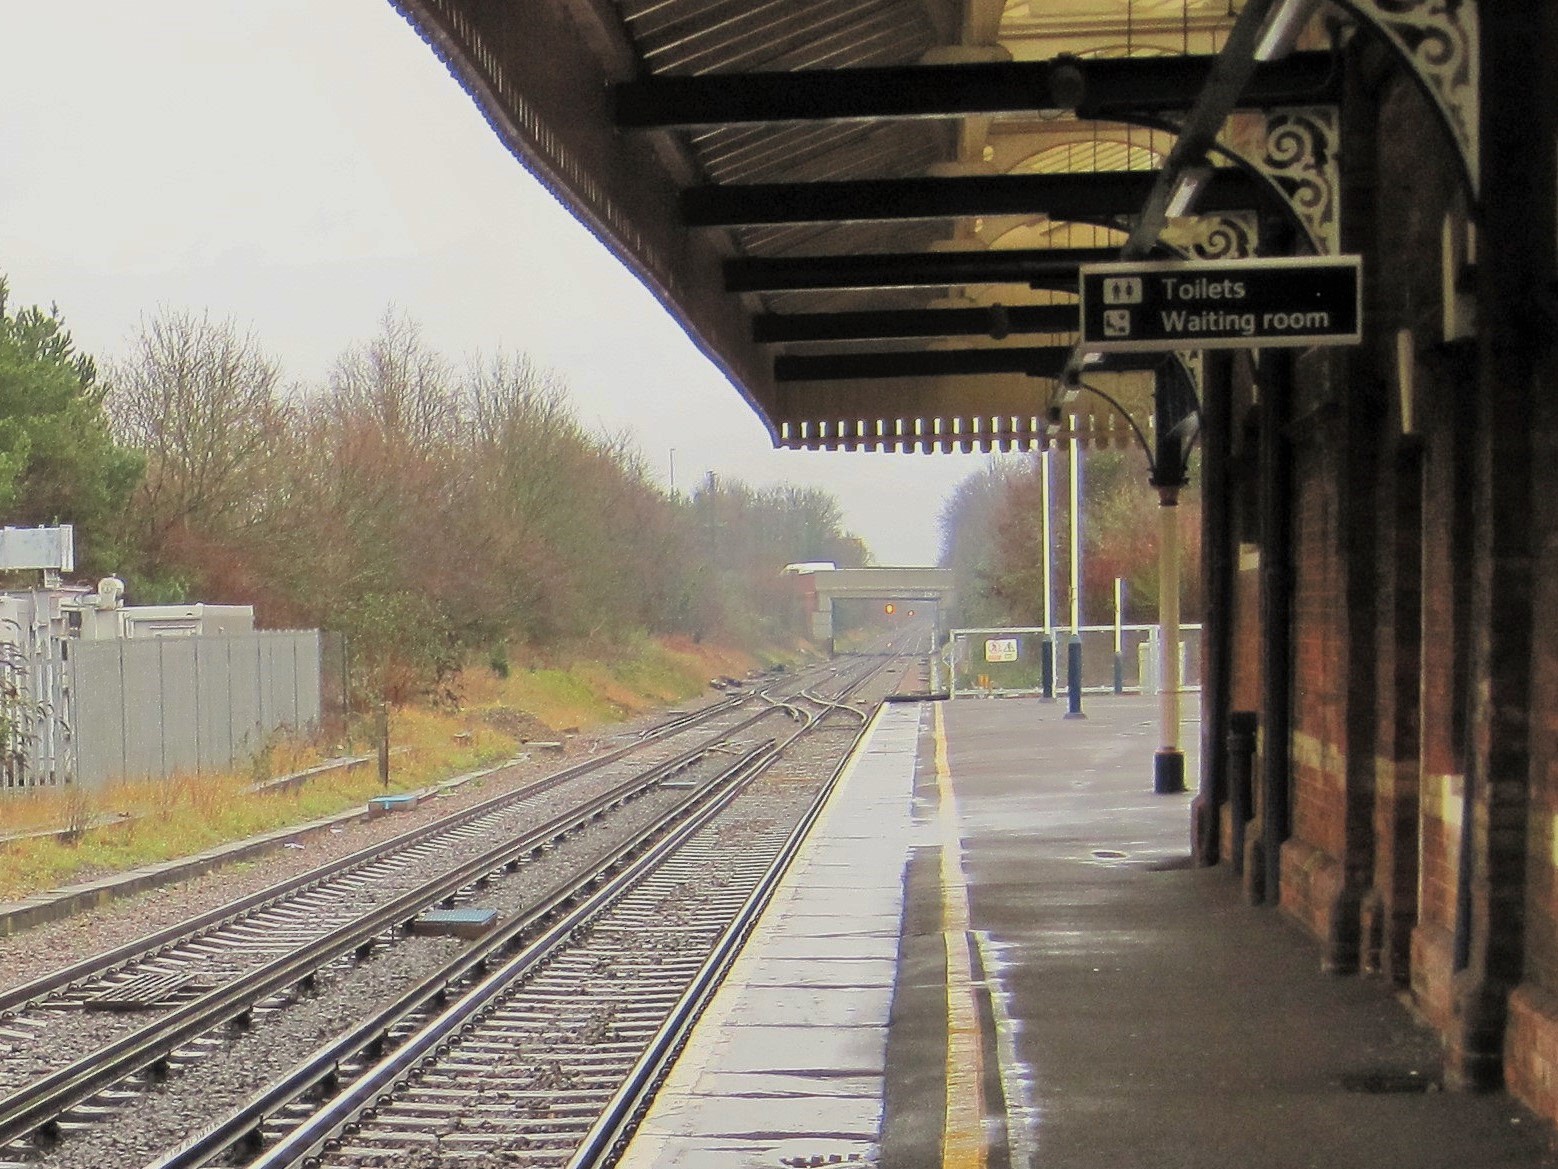 Portswood railway station